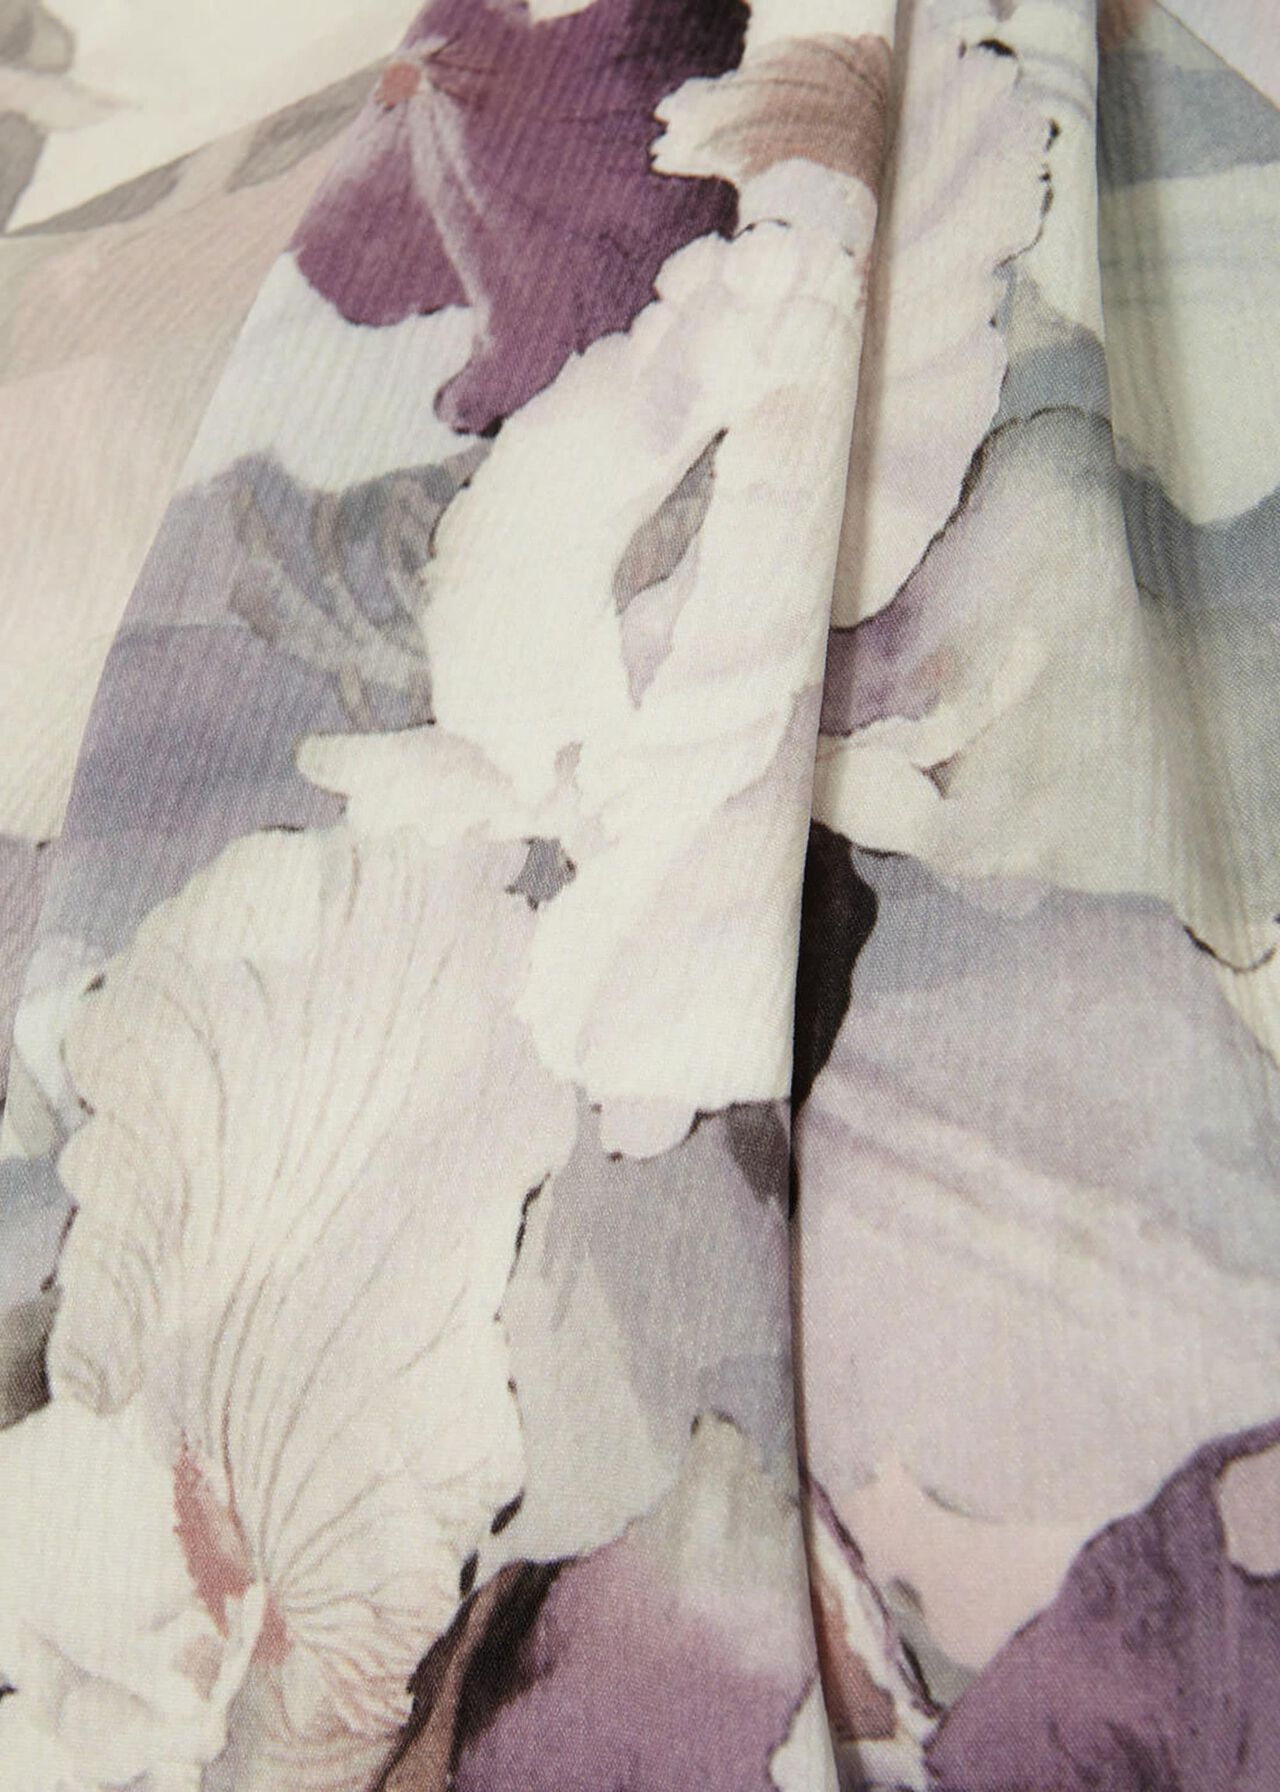 Wanda Floral Print Dress